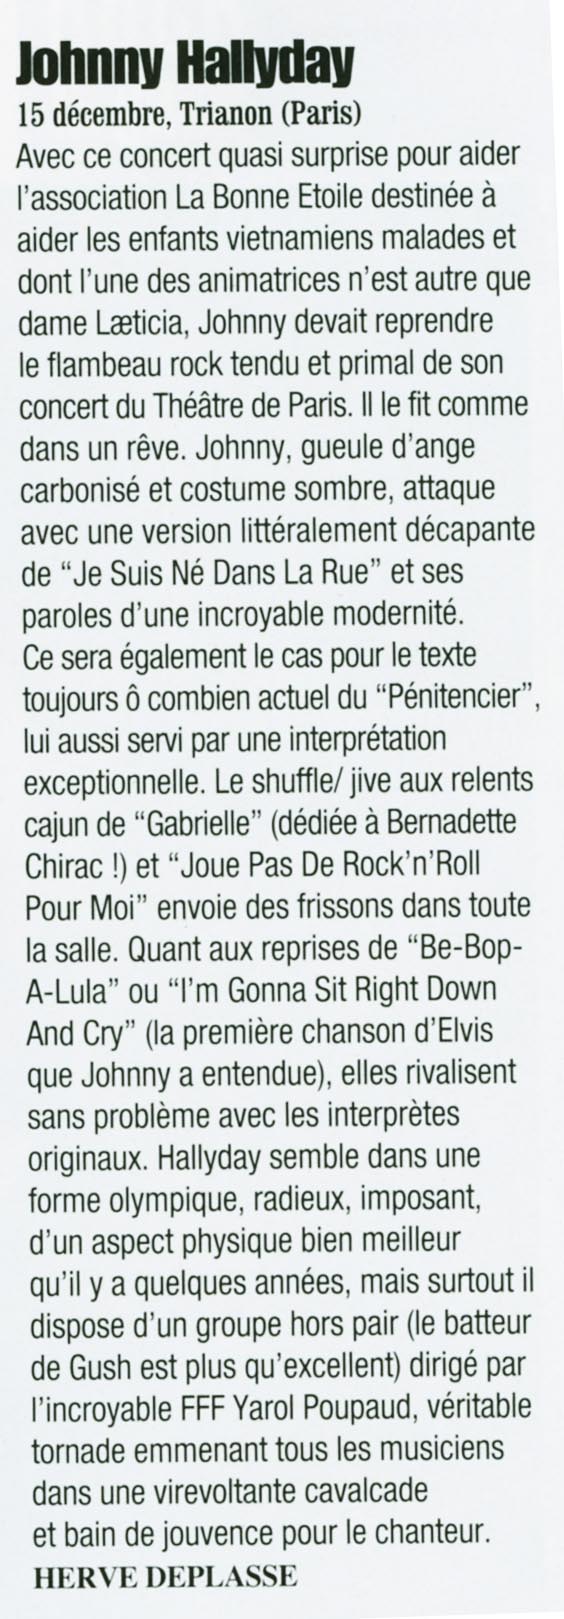 Johnny Hallyday au Trianon par Hervé Deplasse ("Rock Et Folk", février 2014) 14011710293016724011905817